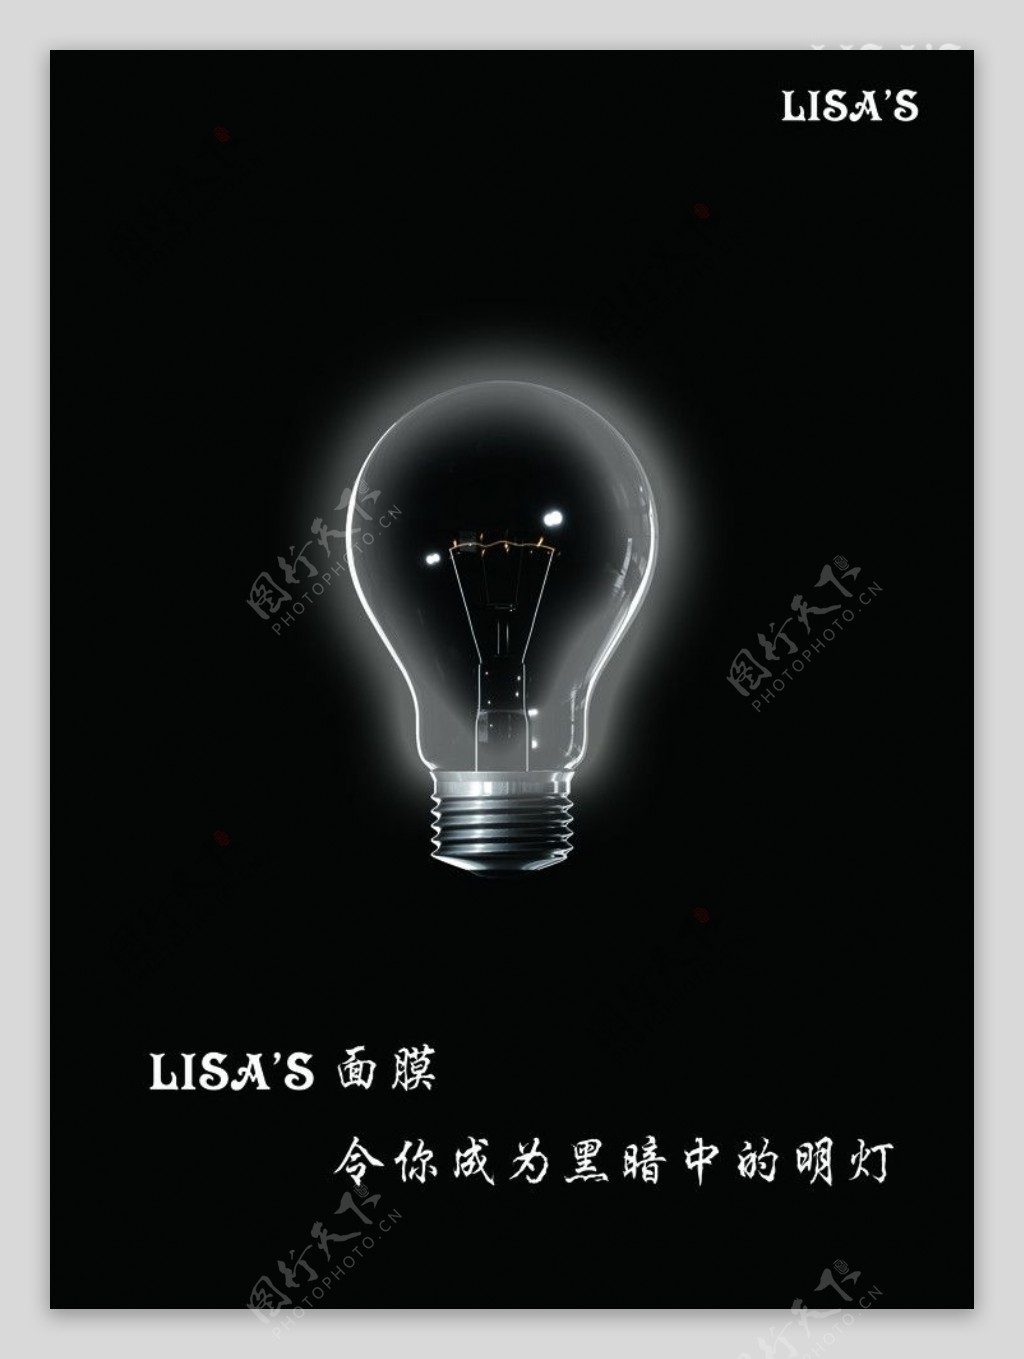 LISAS美白面膜广告图片